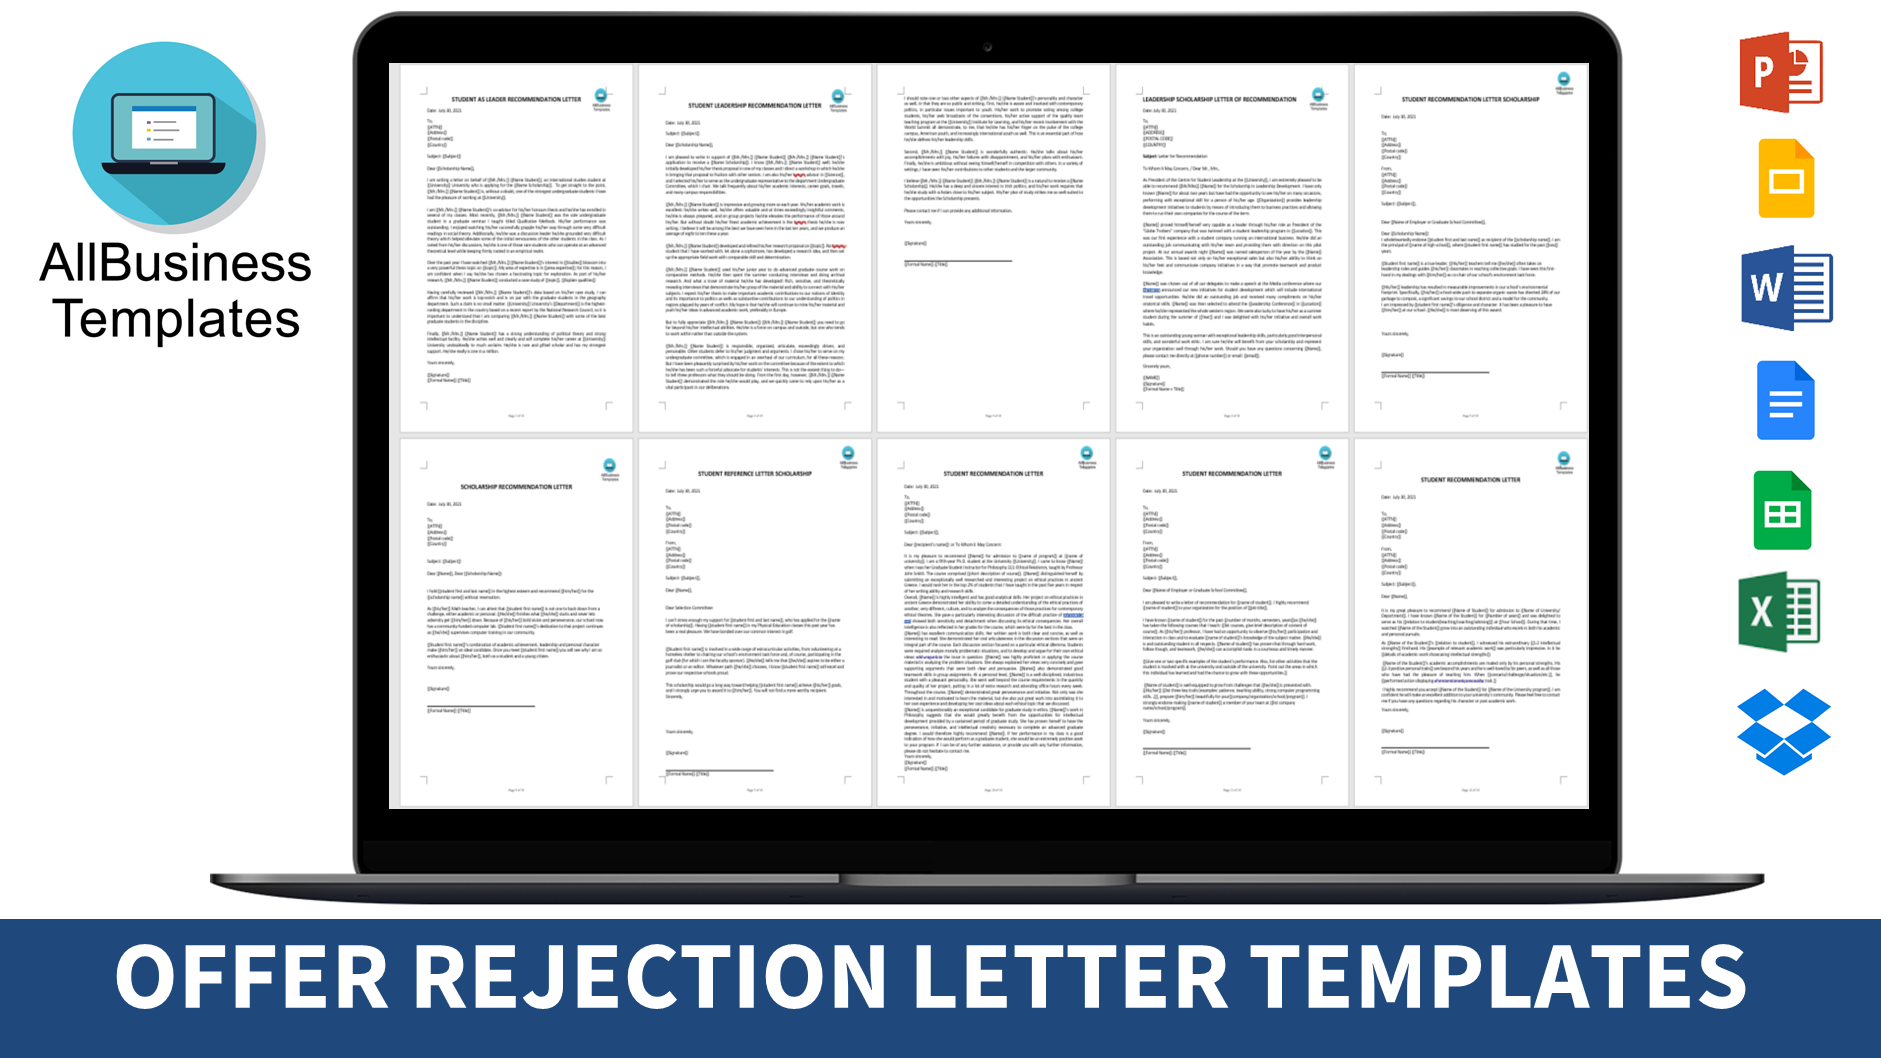 email job rejection plantilla imagen principal